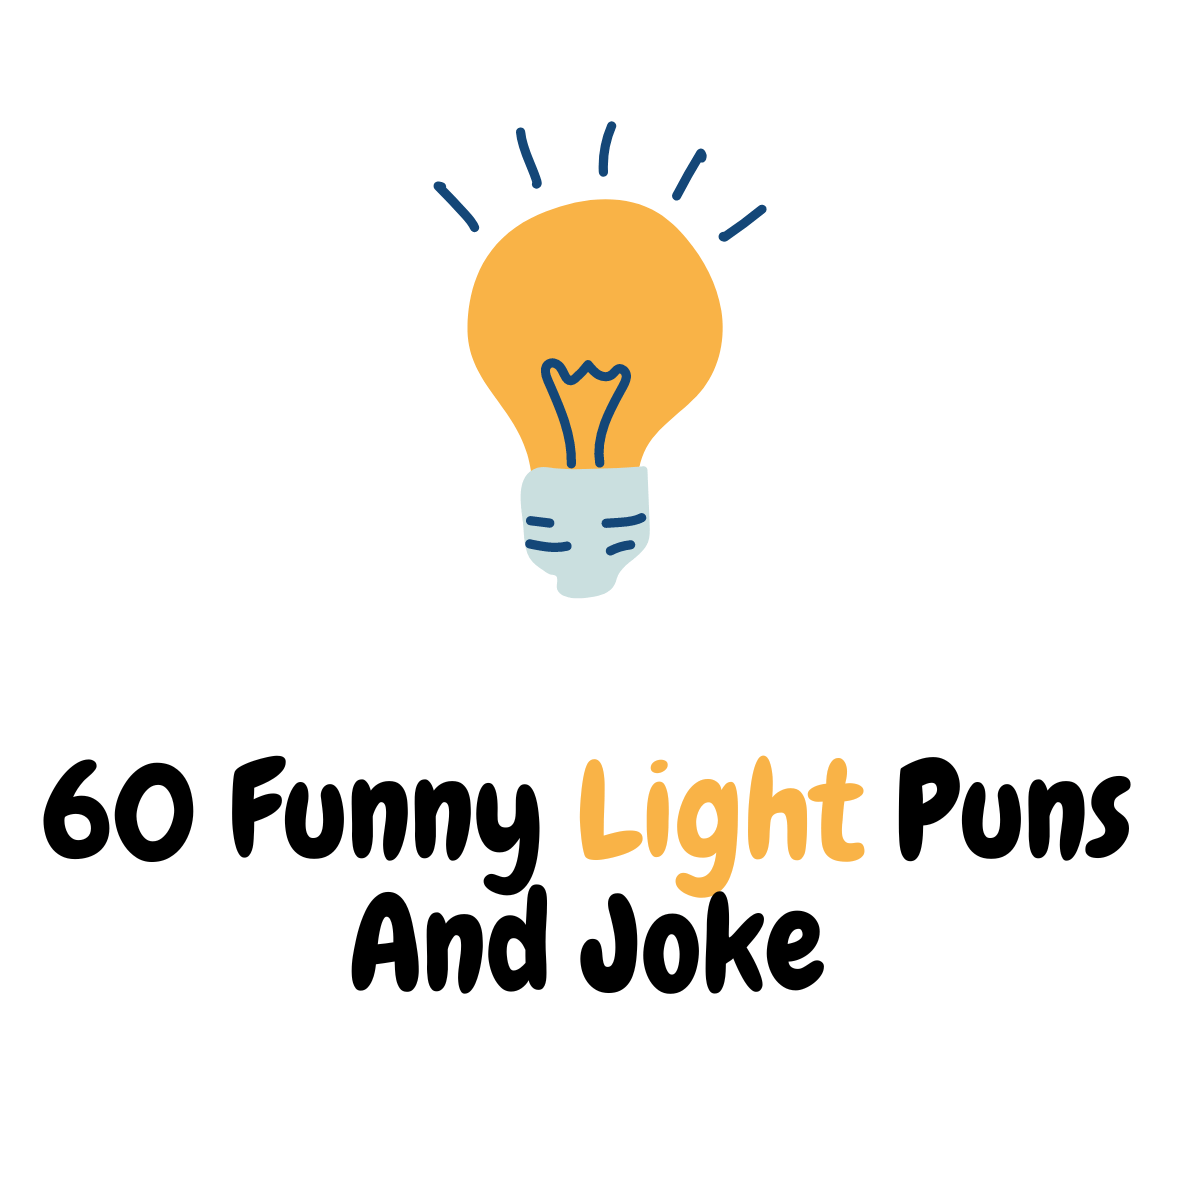 Funny Light Puns And Joke